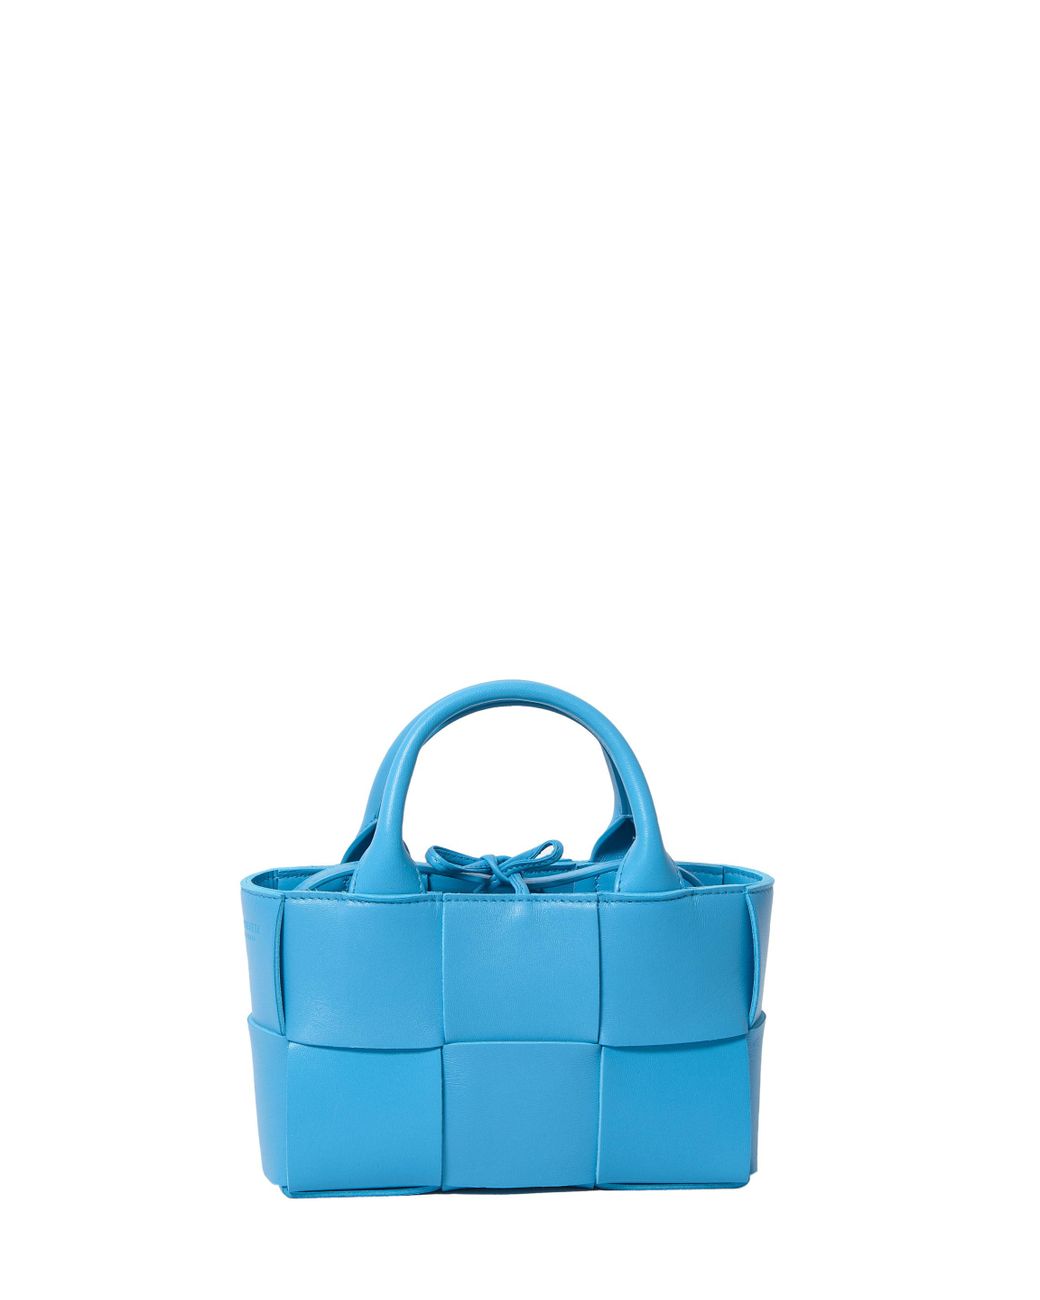 Bottega Veneta Candy Arco Tote Bag in Blue | Lyst